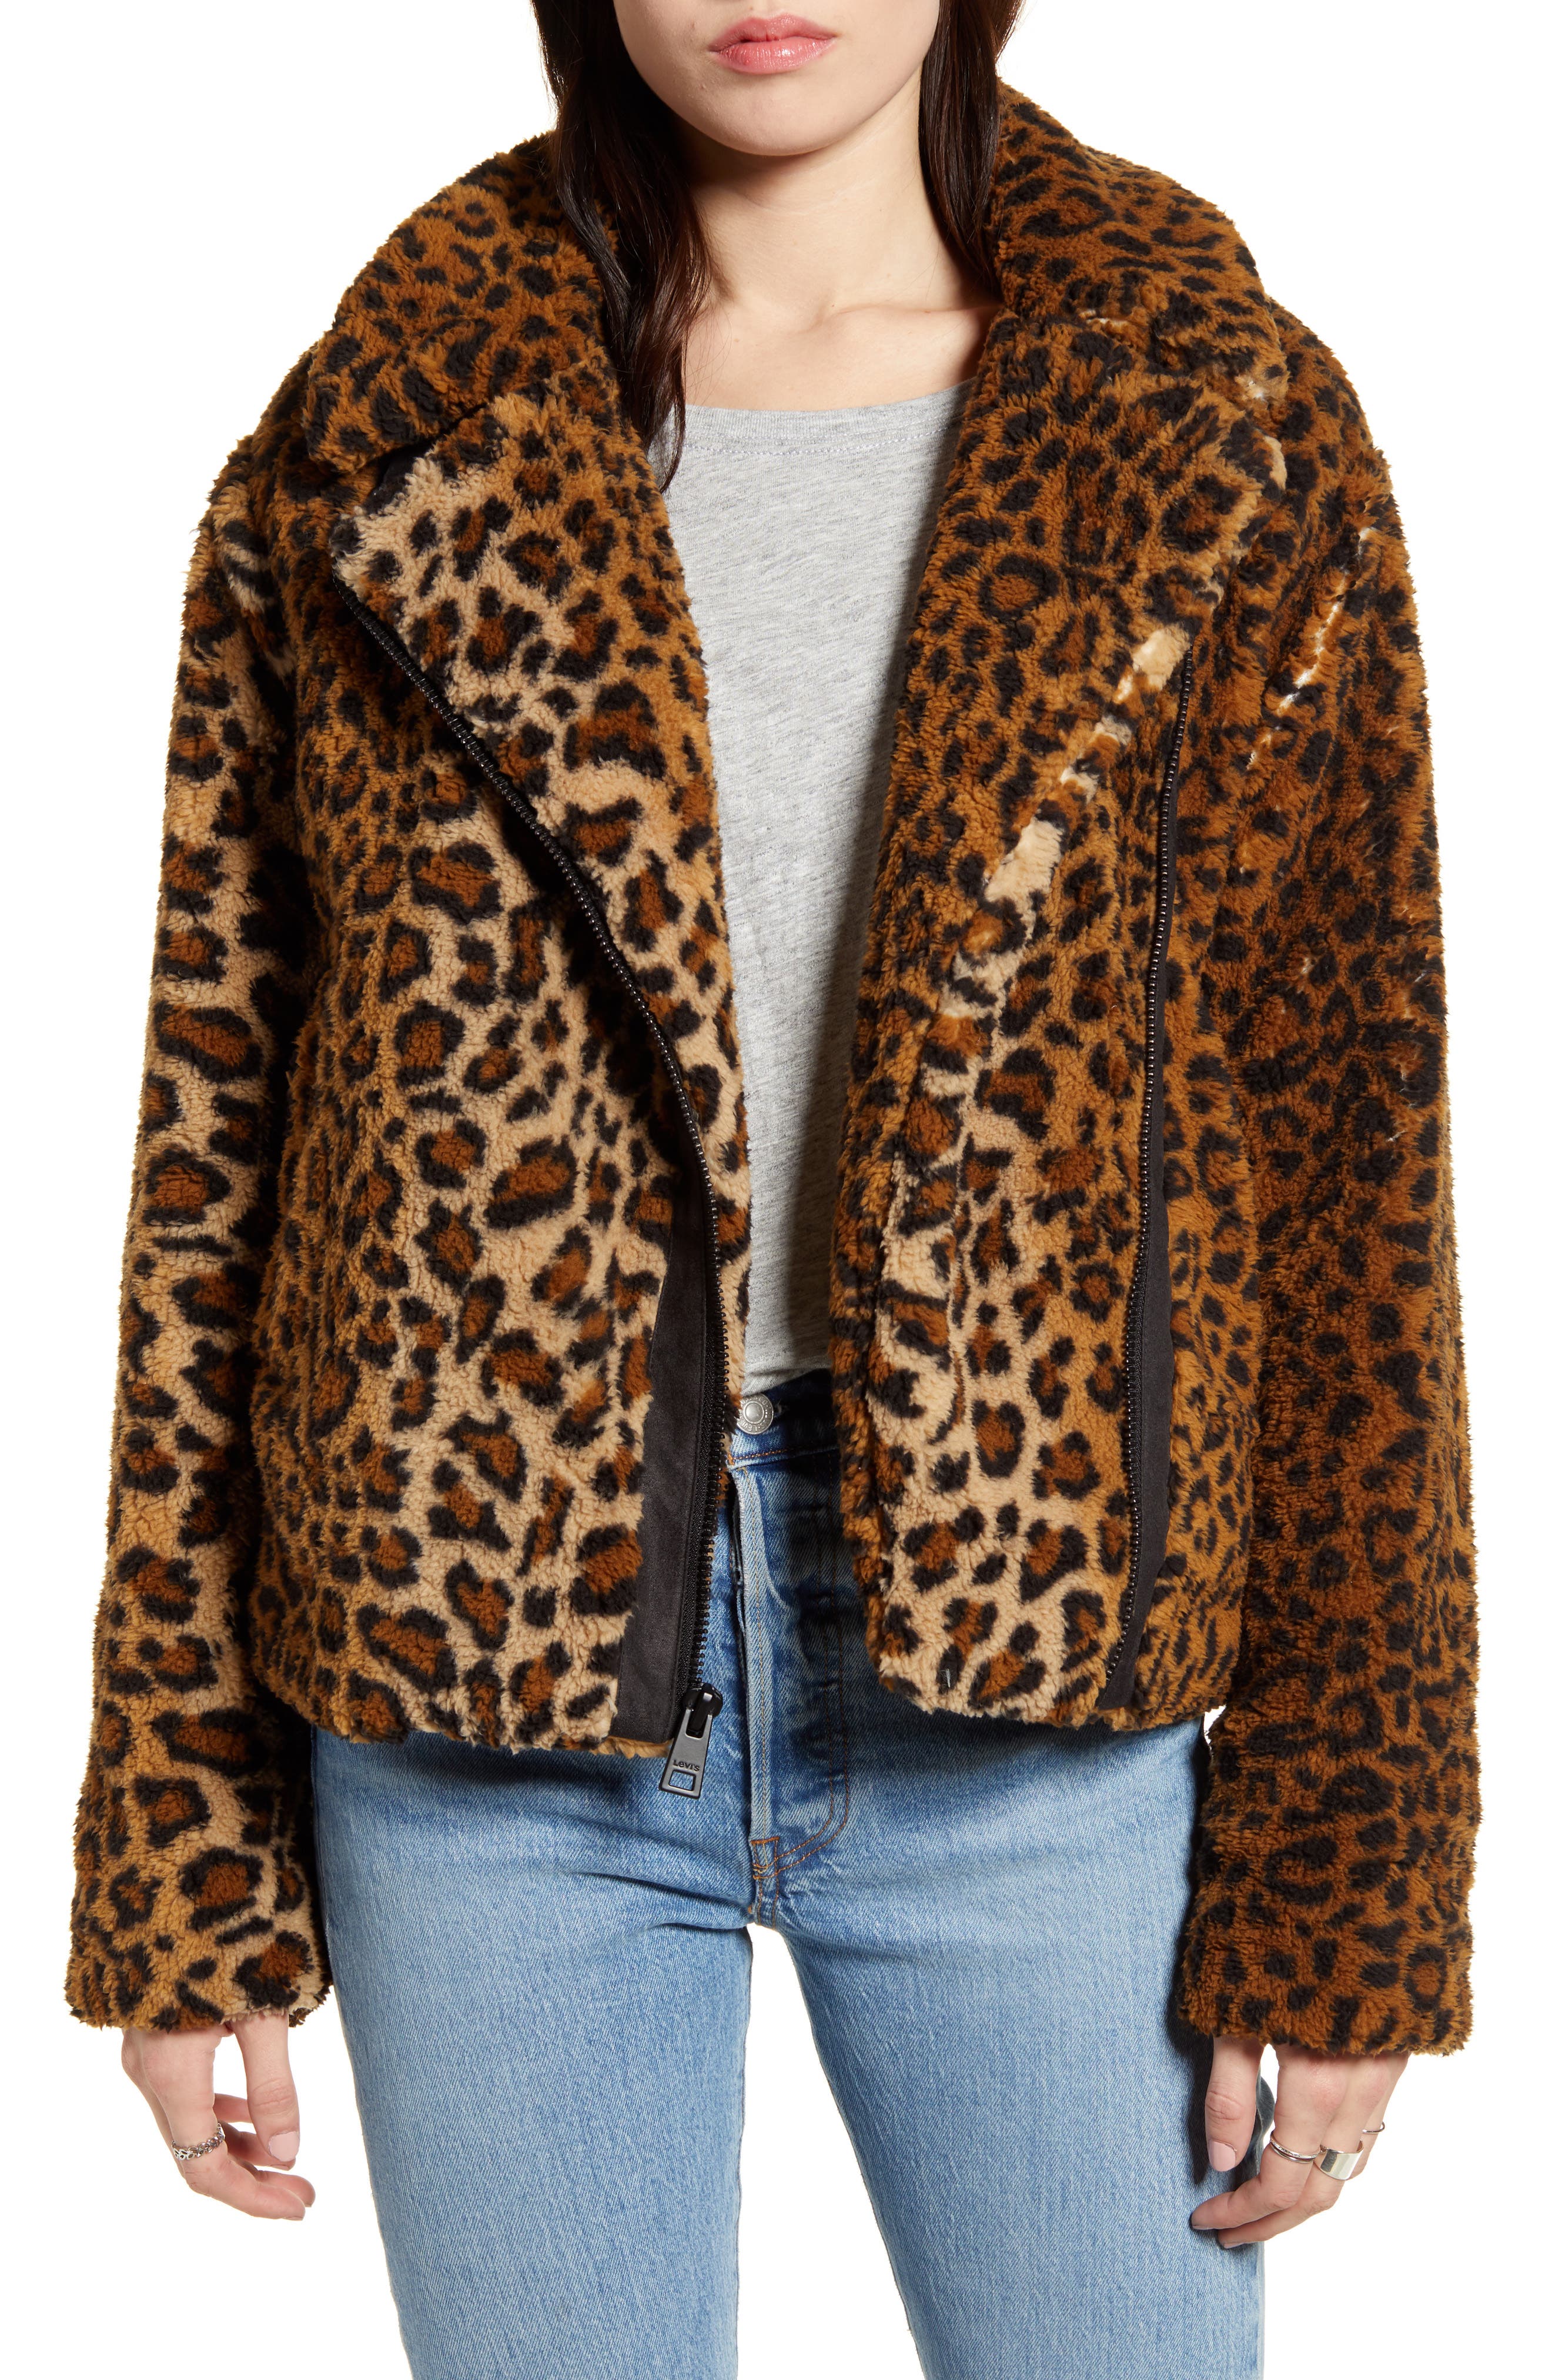 levi's leopard jacket